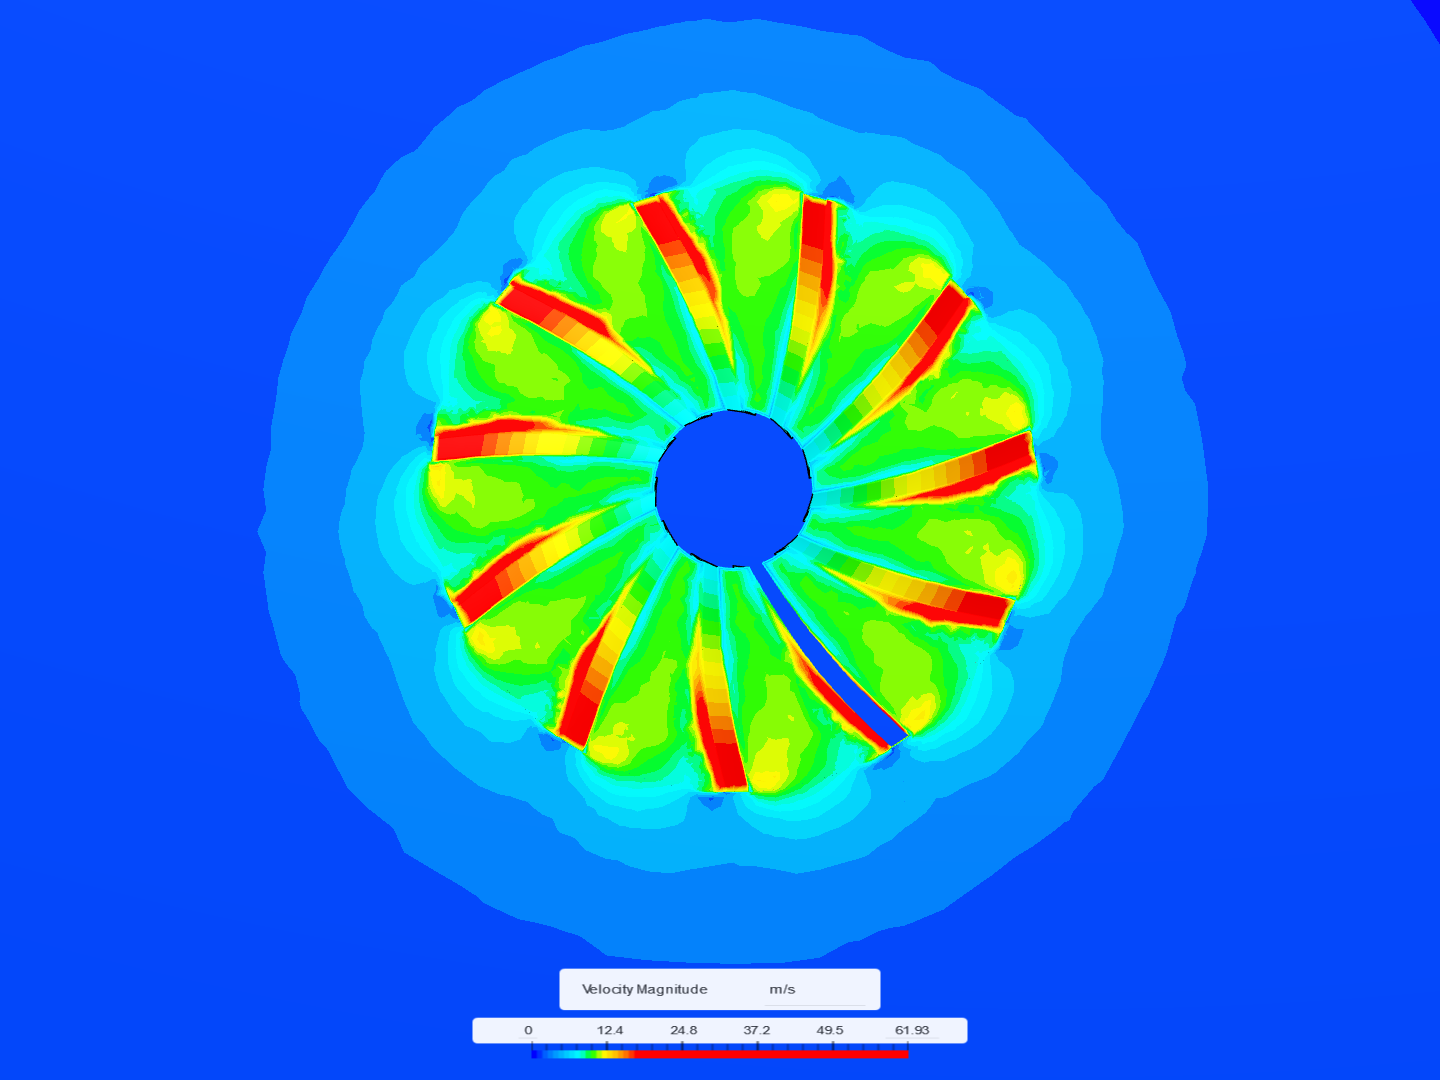 propeller - analysis improvement image